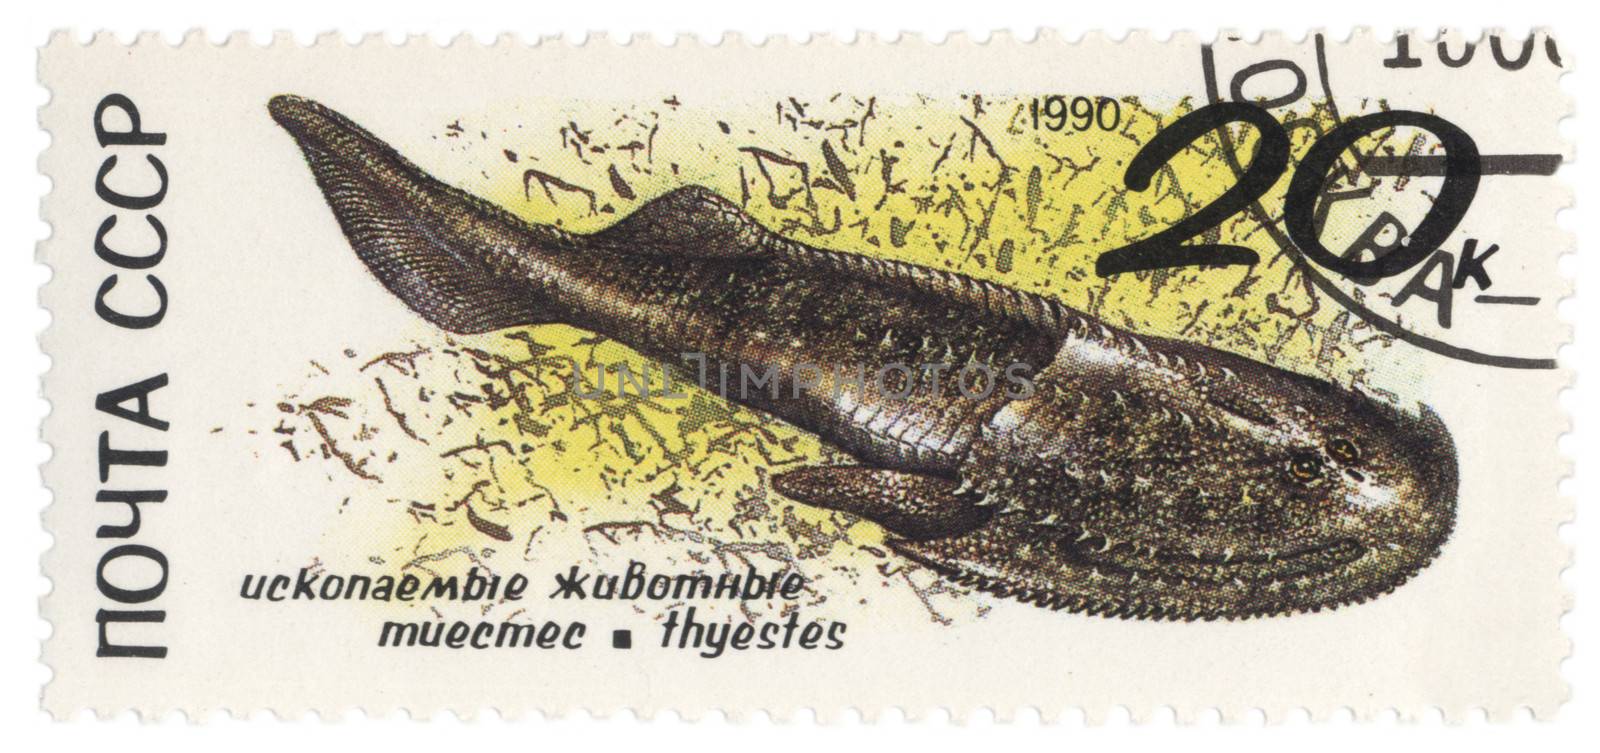 Dinosaur Thyestes on post stamp by wander